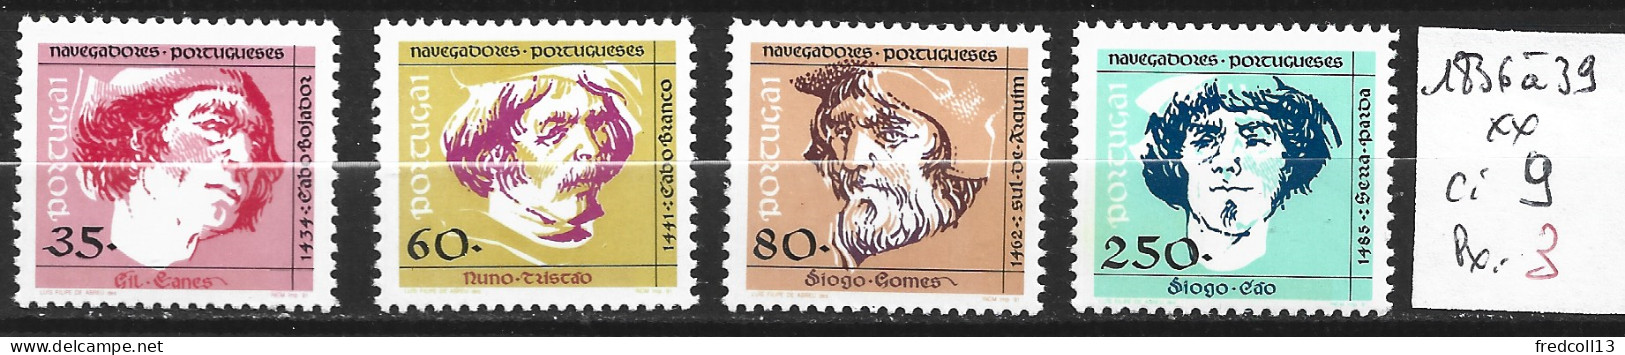 PORTUGAL 1836 à 39 ** Côte 9 € - Unused Stamps